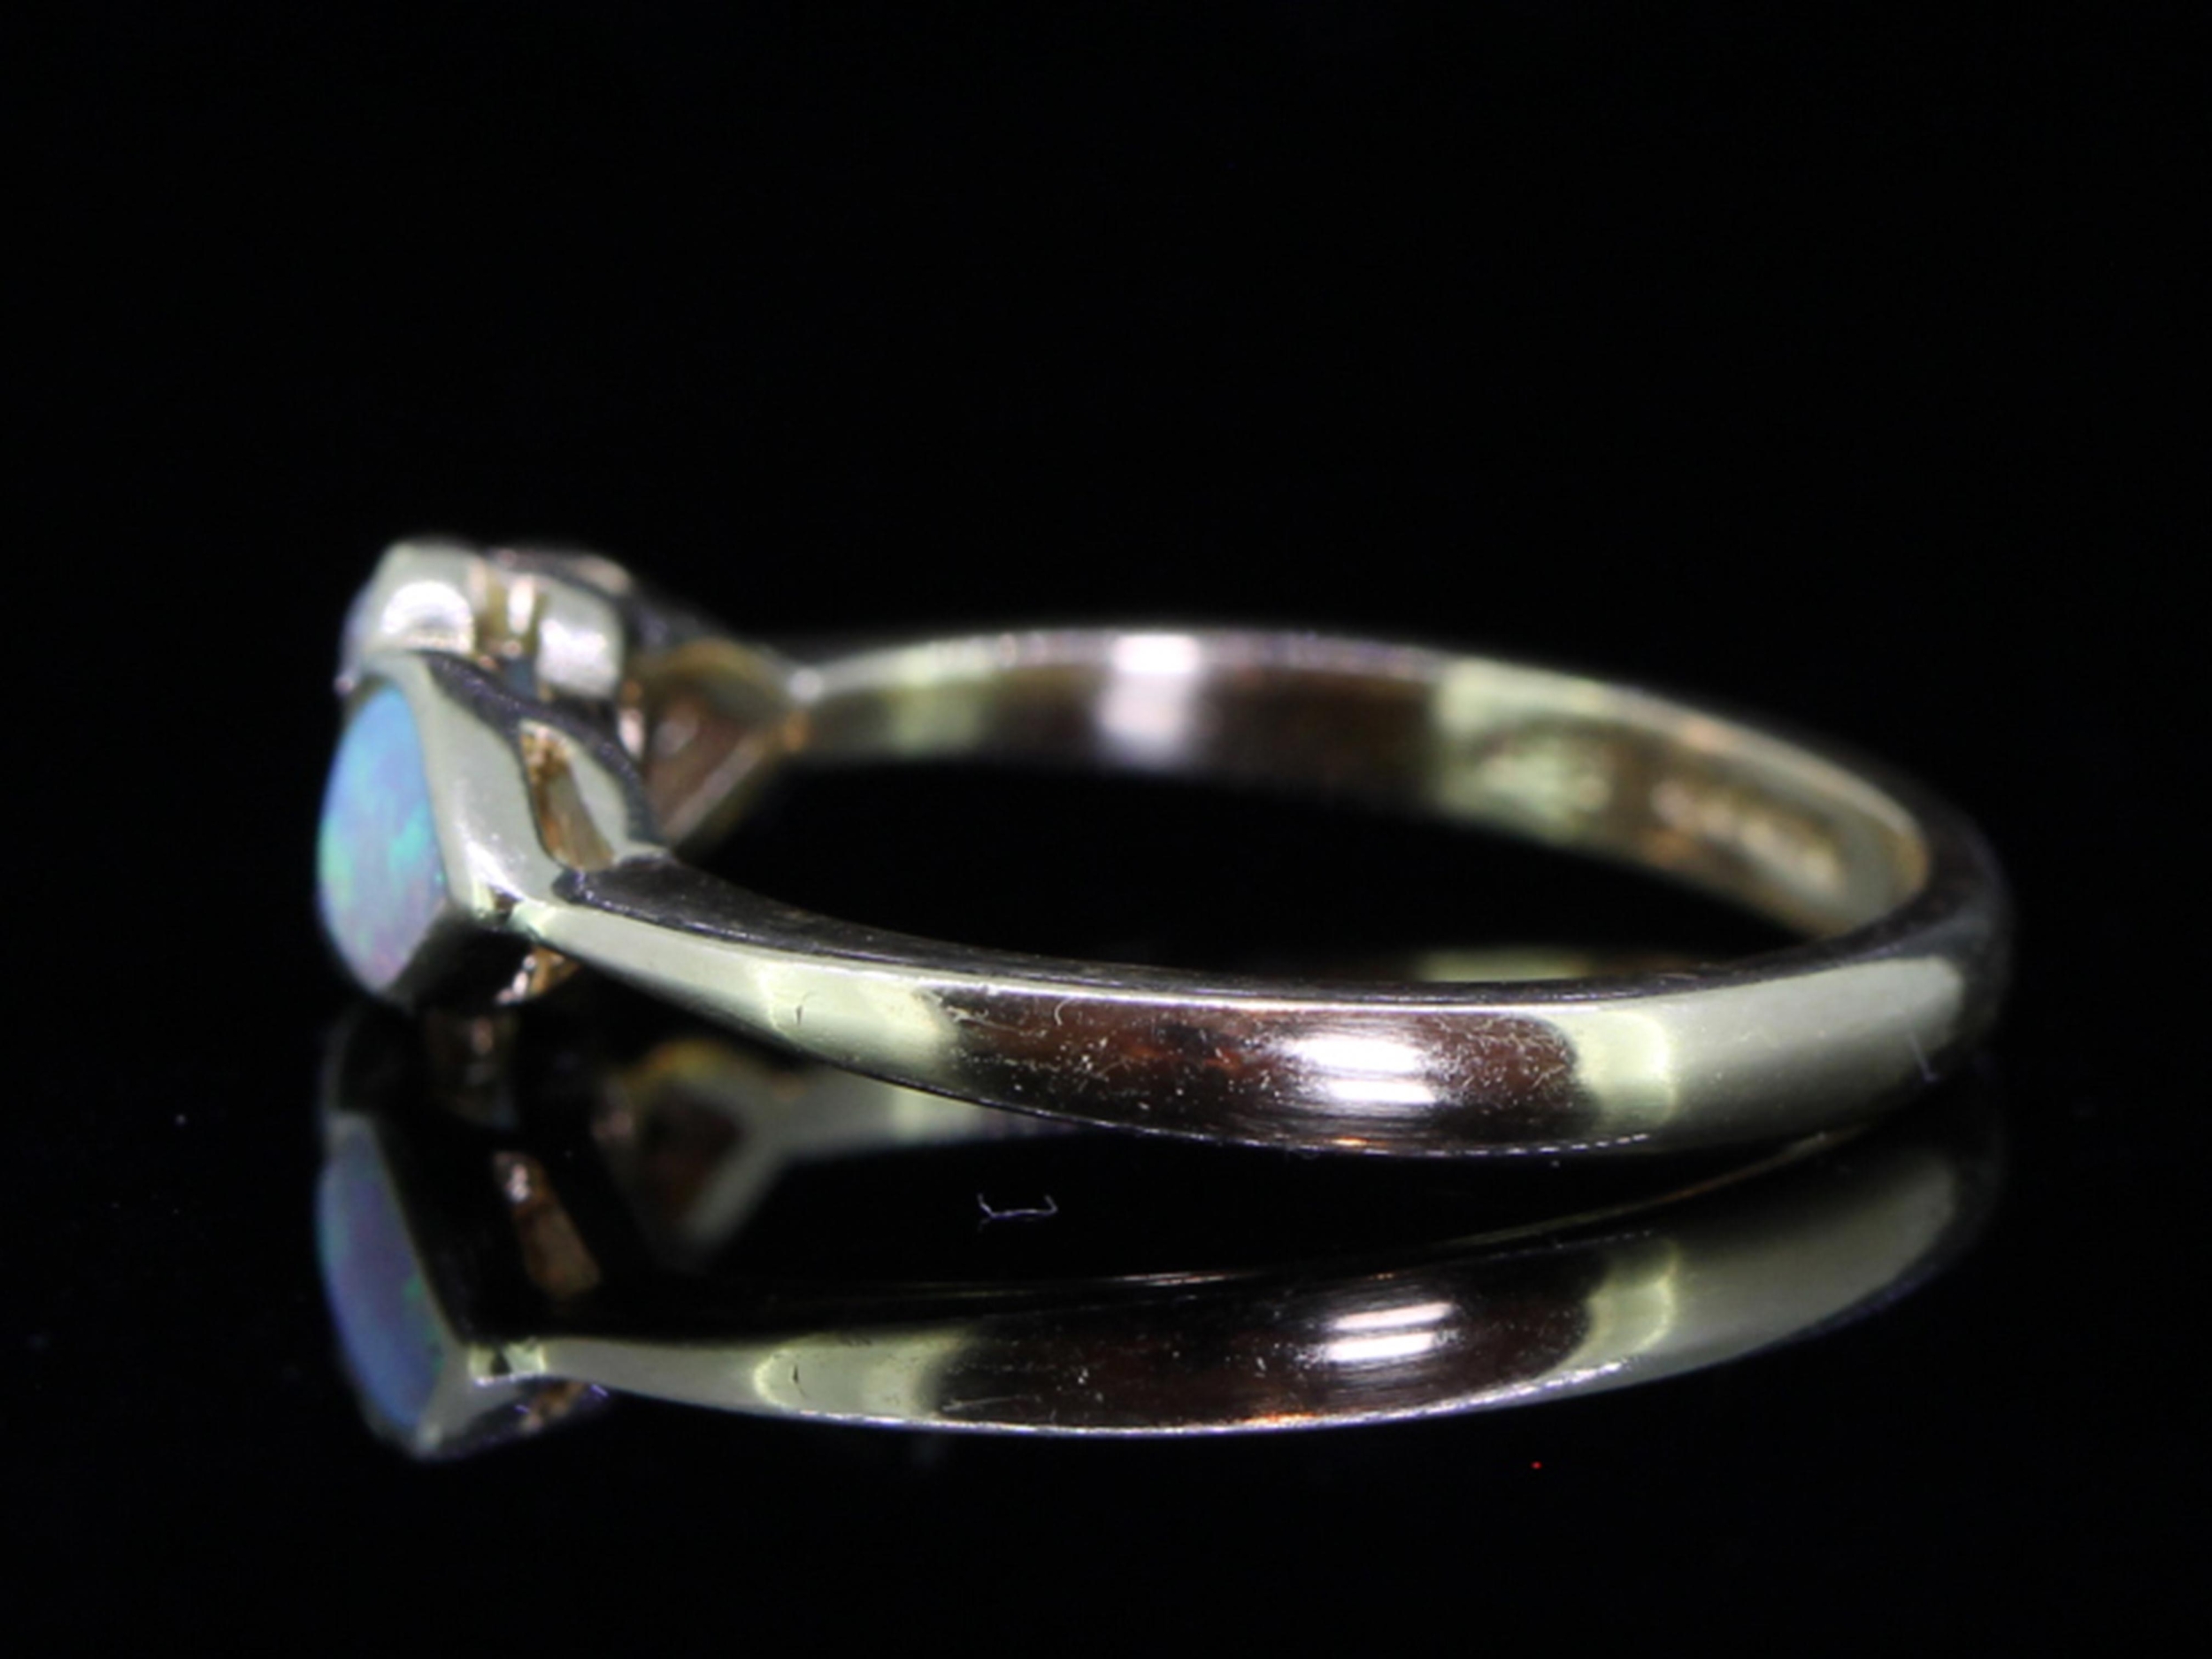  Unique Australian Opal And Diamond 18 Carat Gold Ring